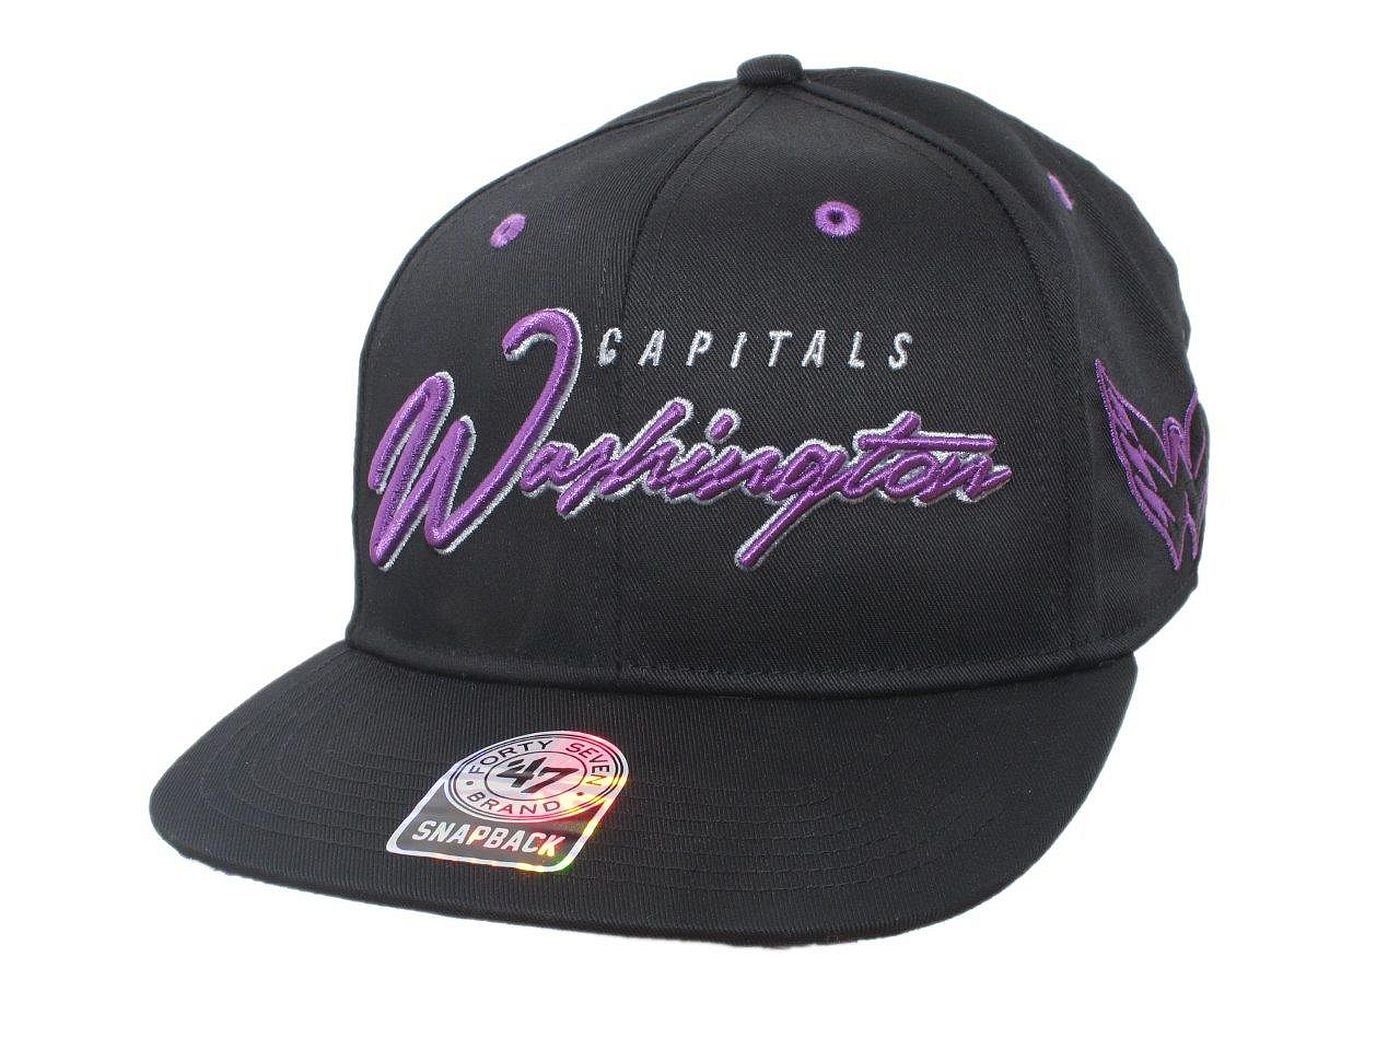 '47 Brand Baseball Cap 47 Brand - NHL Cap Basecap Kappe Mütze Eishockey "Capitals | Baseball Caps